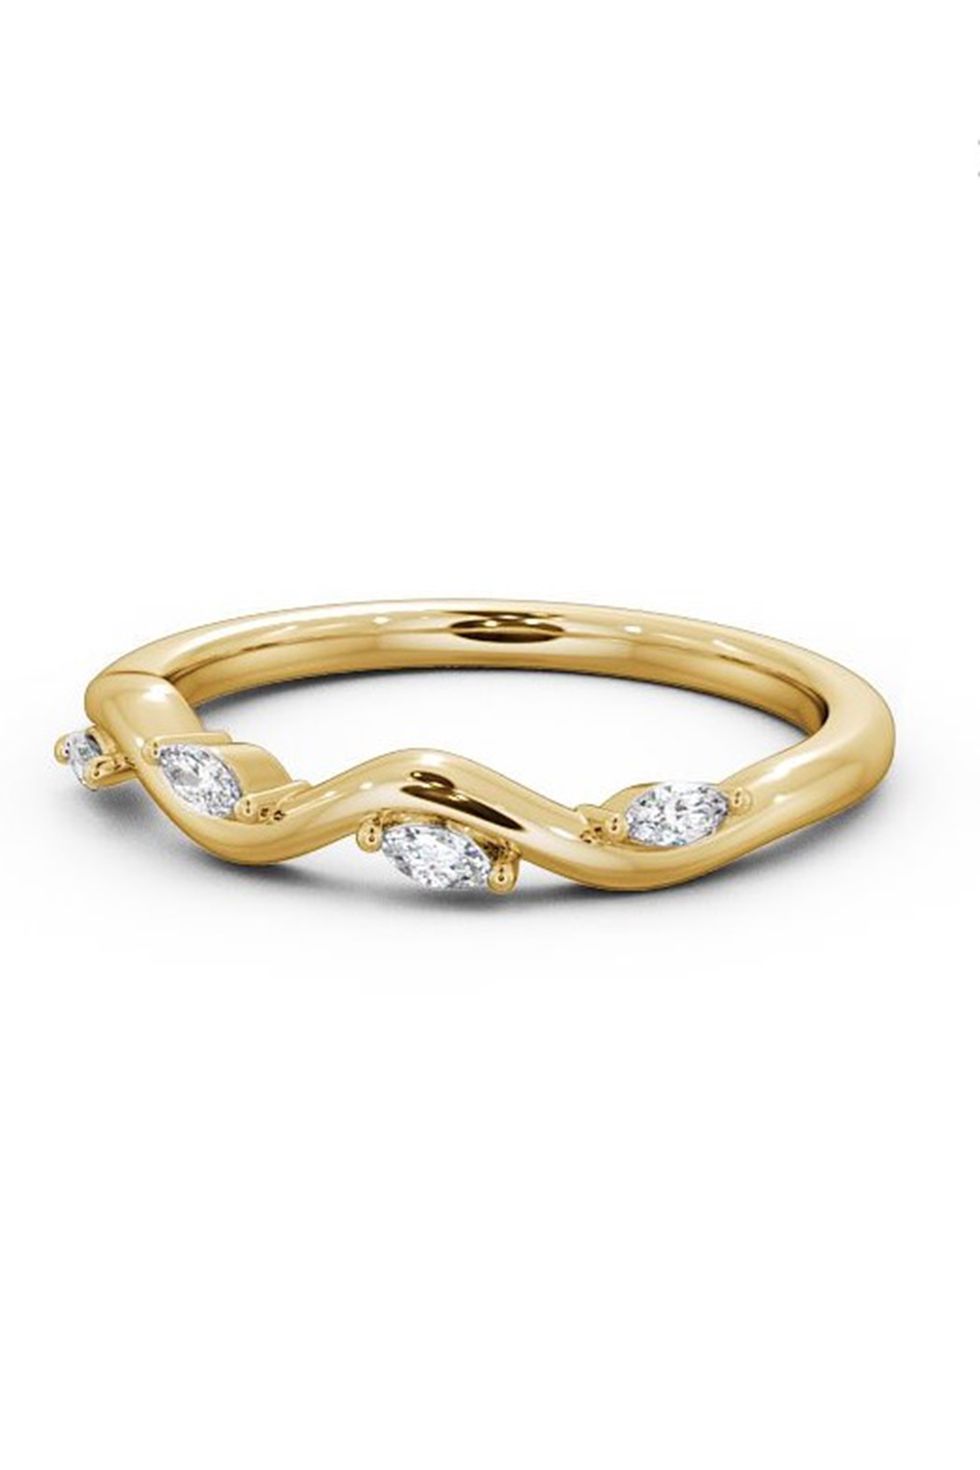 Ring, Jewellery, Fashion accessory, Yellow, Engagement ring, Bangle, Metal, Body jewelry, Gold, Diamond, 